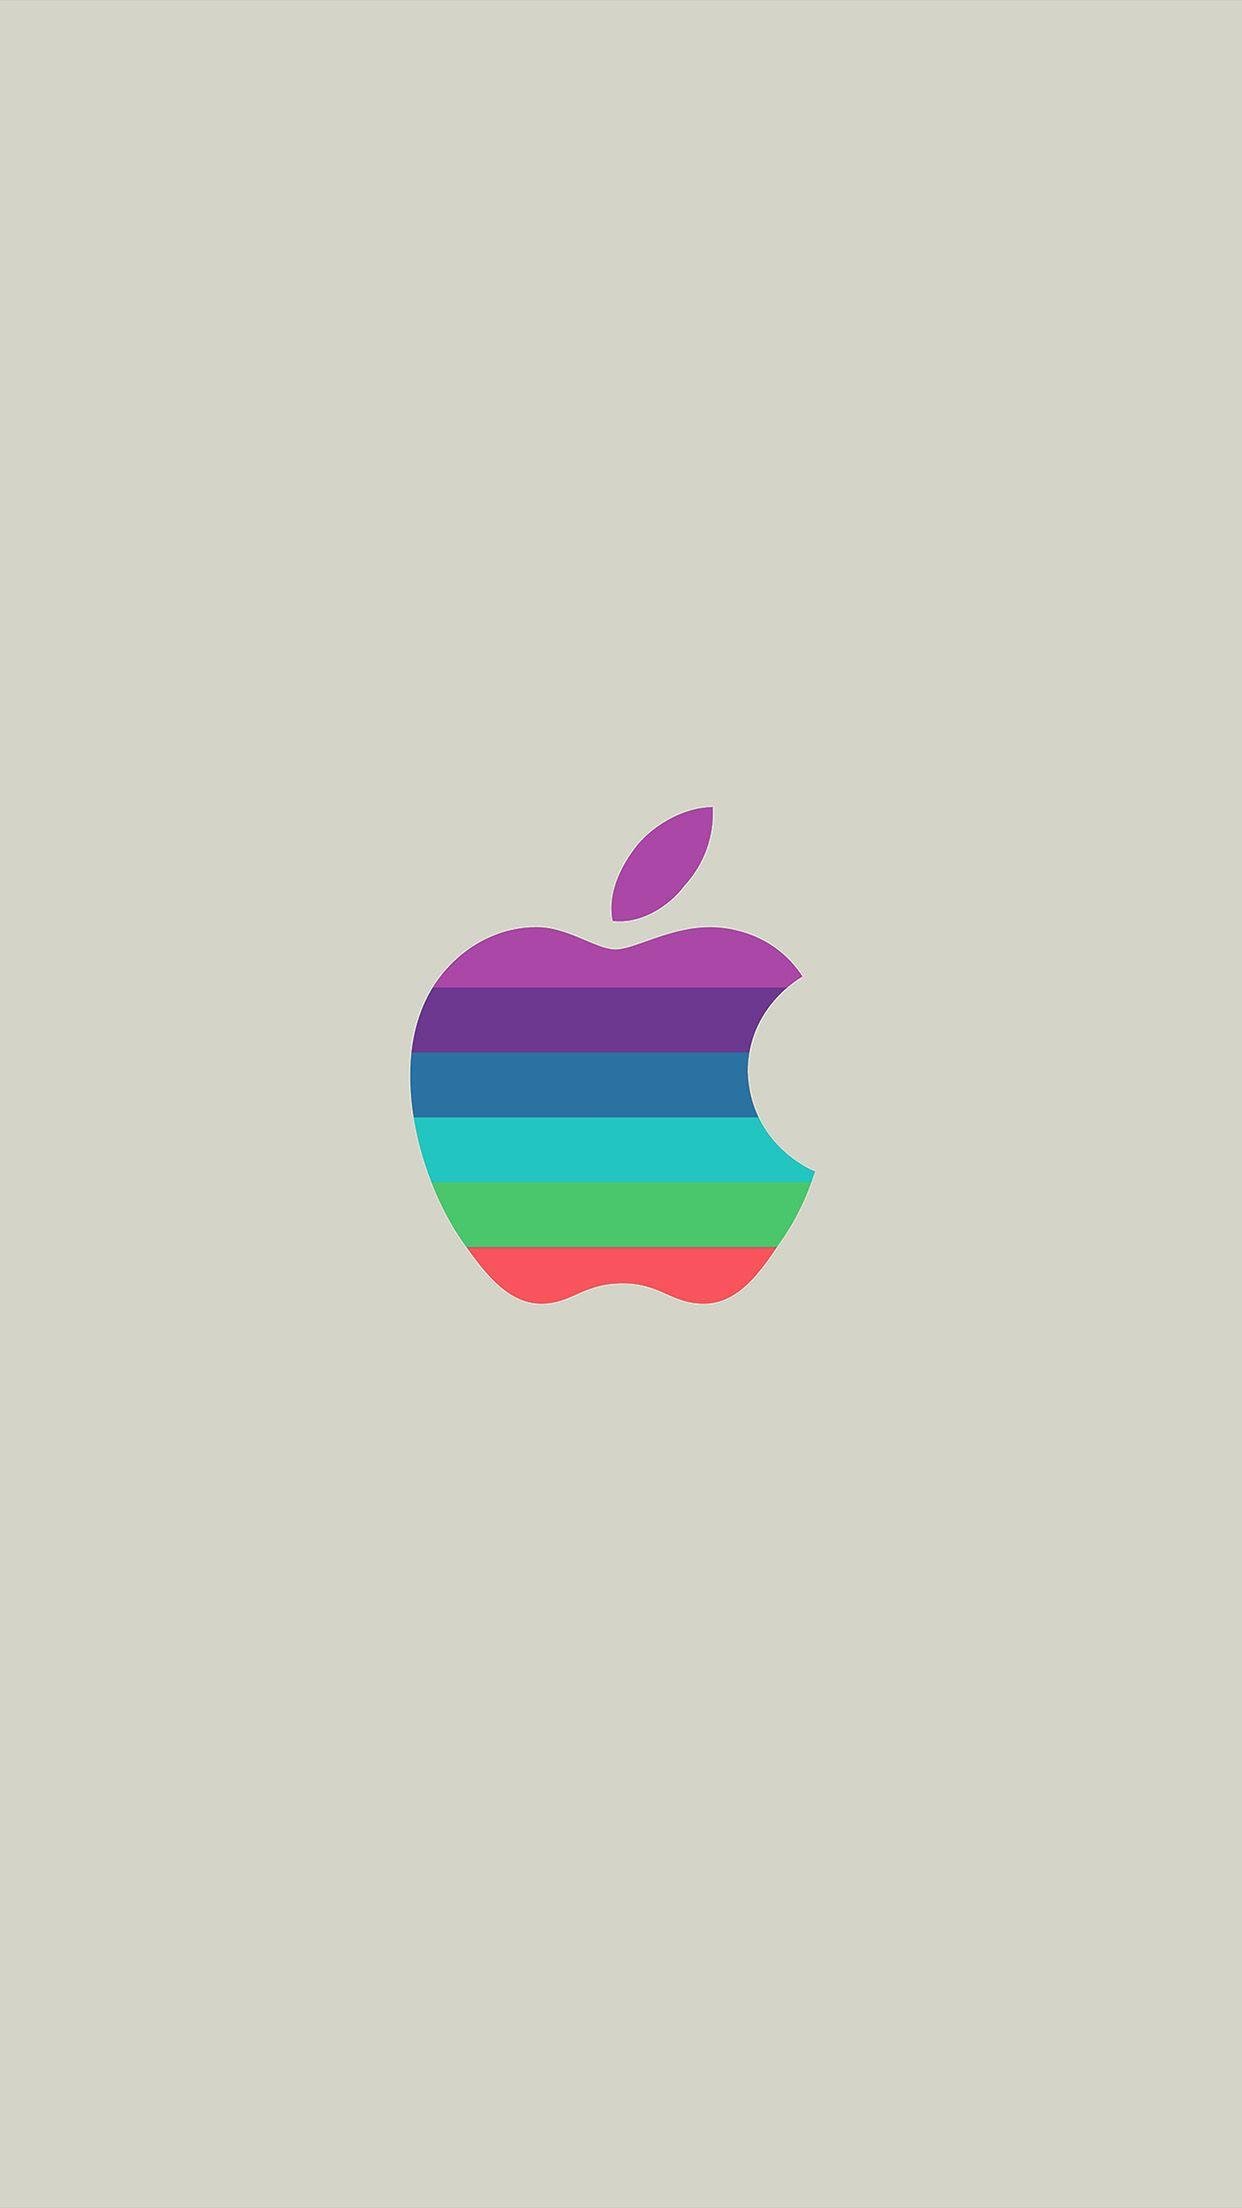 6 Color Logo - iPhone 6 wallpaper. minimal logo apple